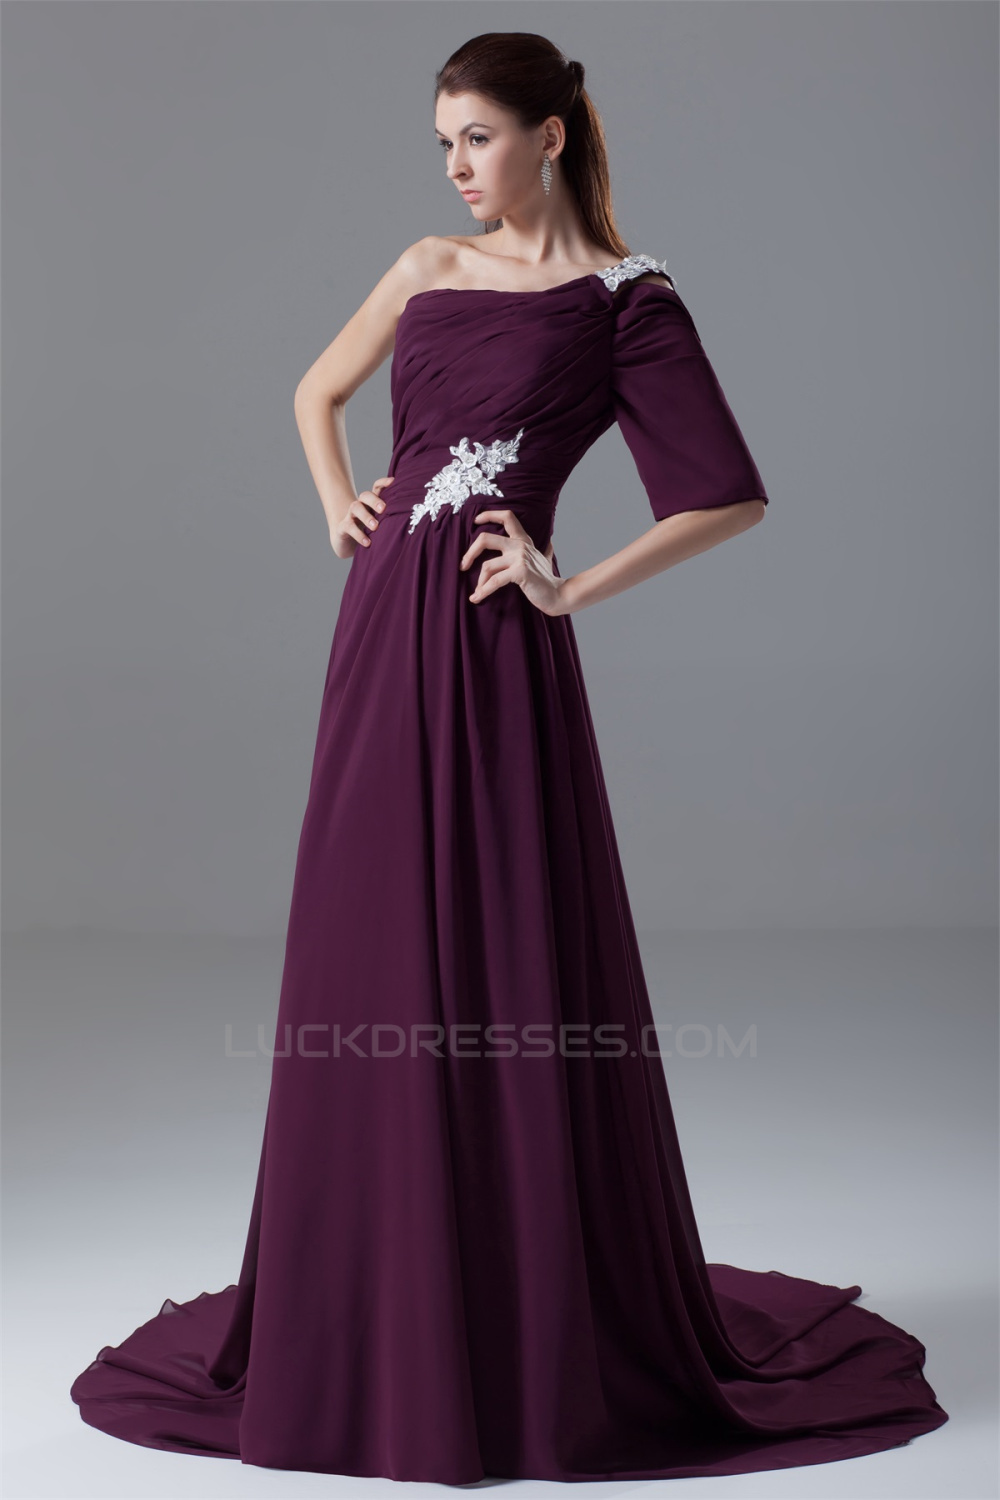 A-Line Single Sleeve Long Purple Prom/Formal Evening Dresses 02020699